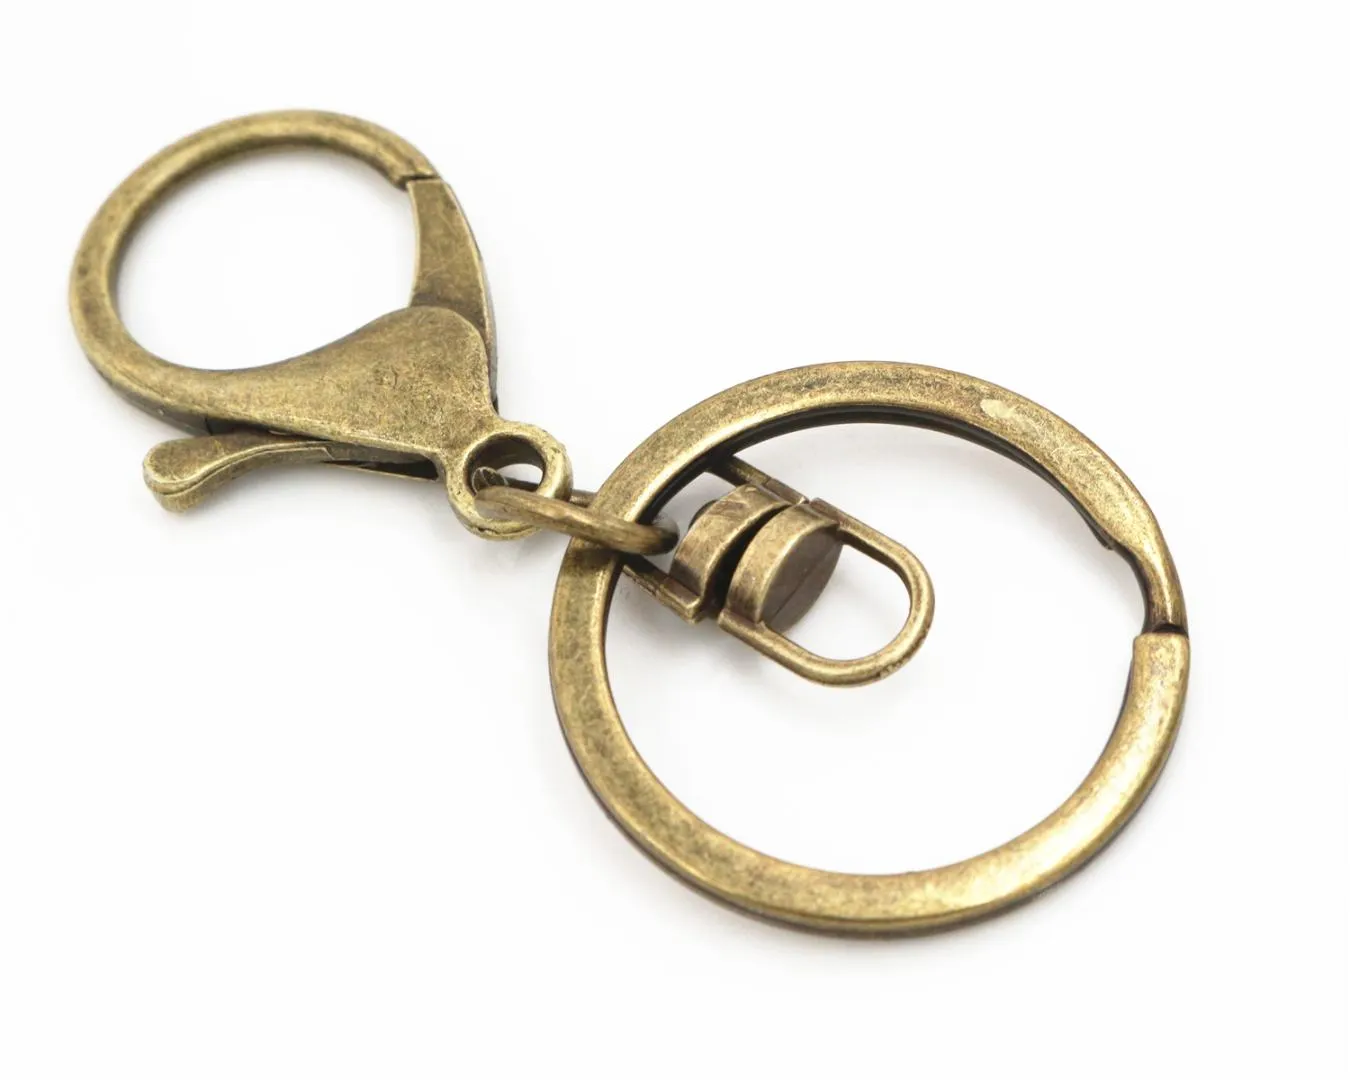 5 Stück / Los 30 mm Schlüsselanhänger lang 70 mm beliebter Klassiker 6 Farben vergoldet Karabinerverschluss Schlüsselhaken Kette Schmuckherstellung für Schlüsselanhänger209z